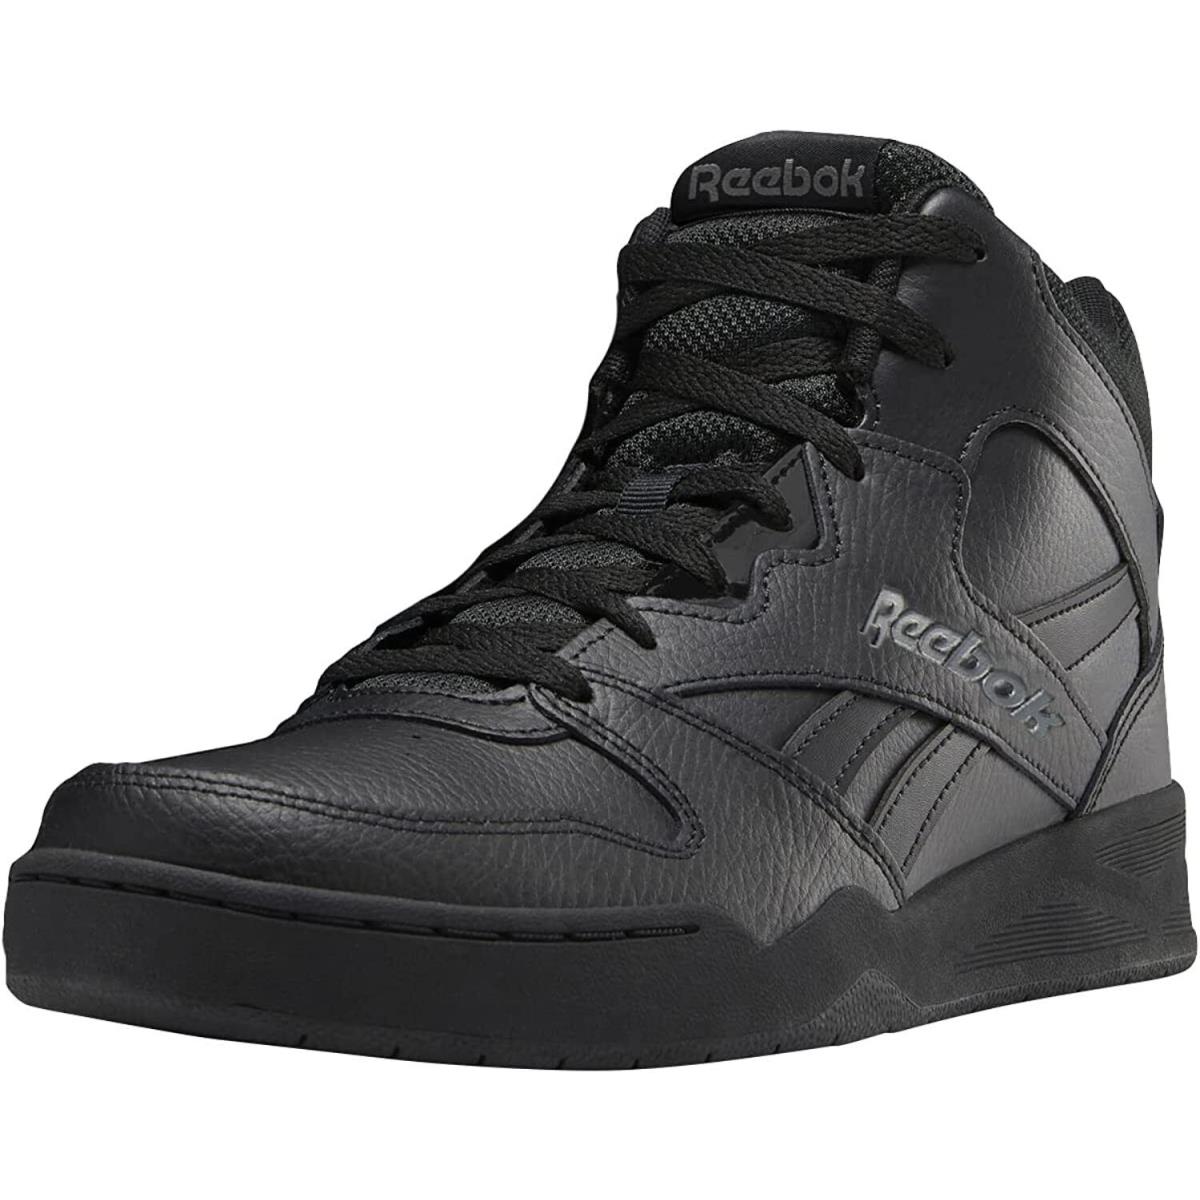 Reebok Mens Shoes Royal BB4500 Hi 2 Black High Leather Textile Black Sneaker - Black